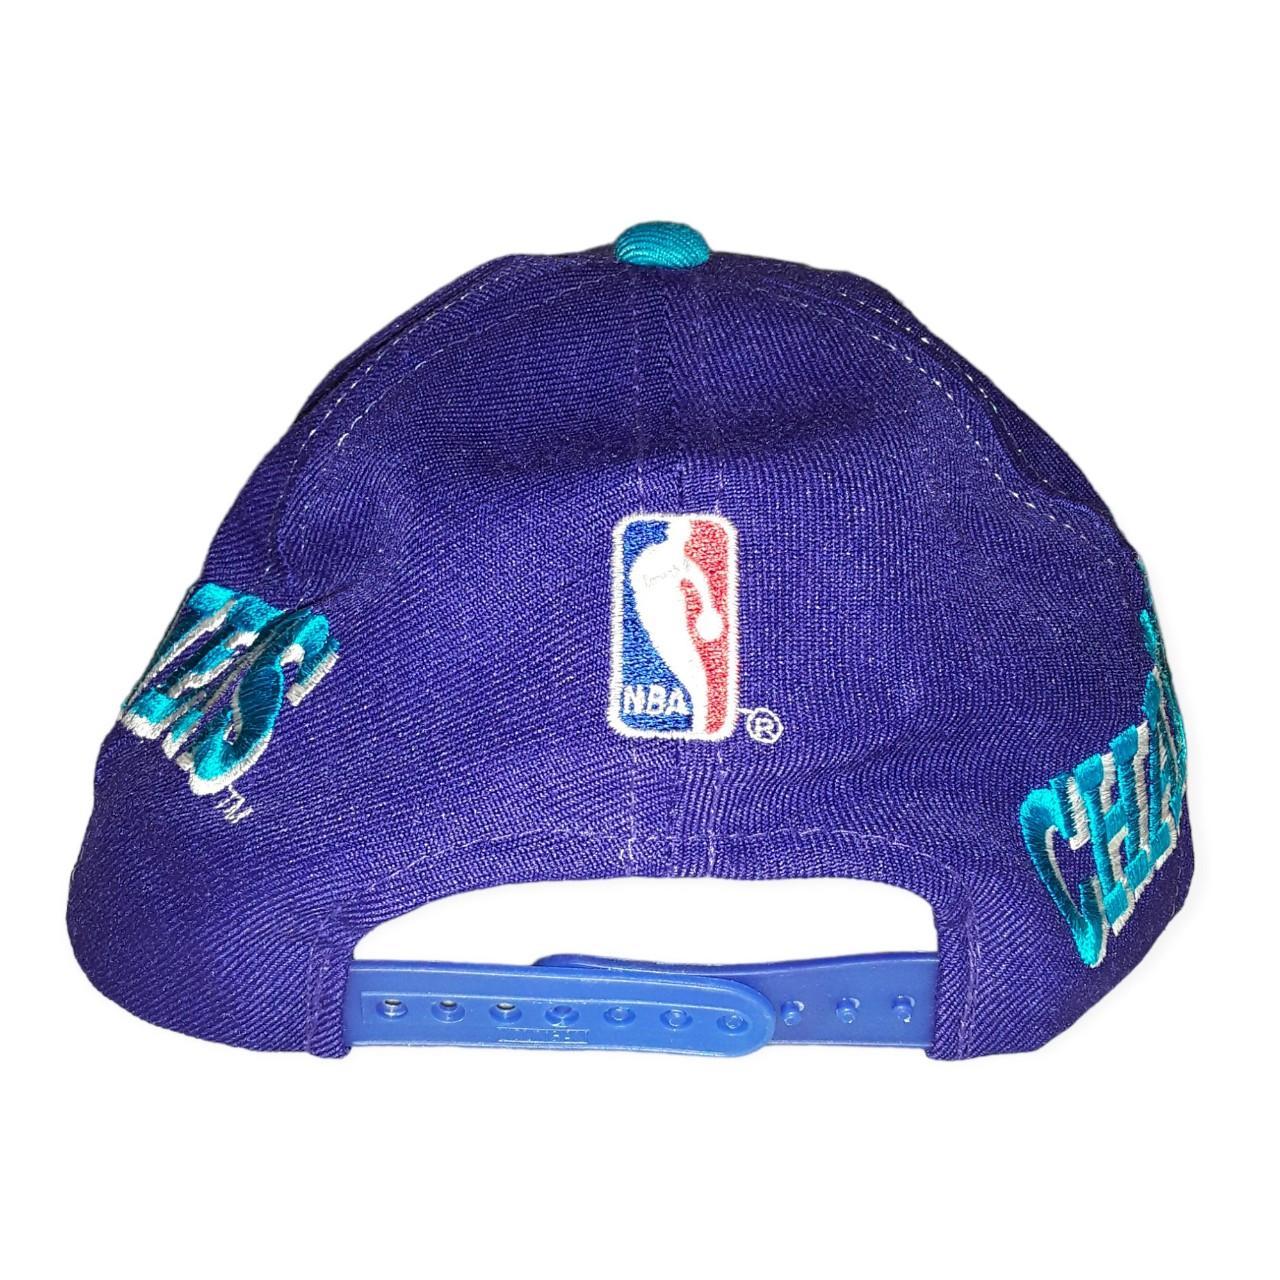 Vintage Sports Specialties 1998 NBA DRAFT HAT - Depop